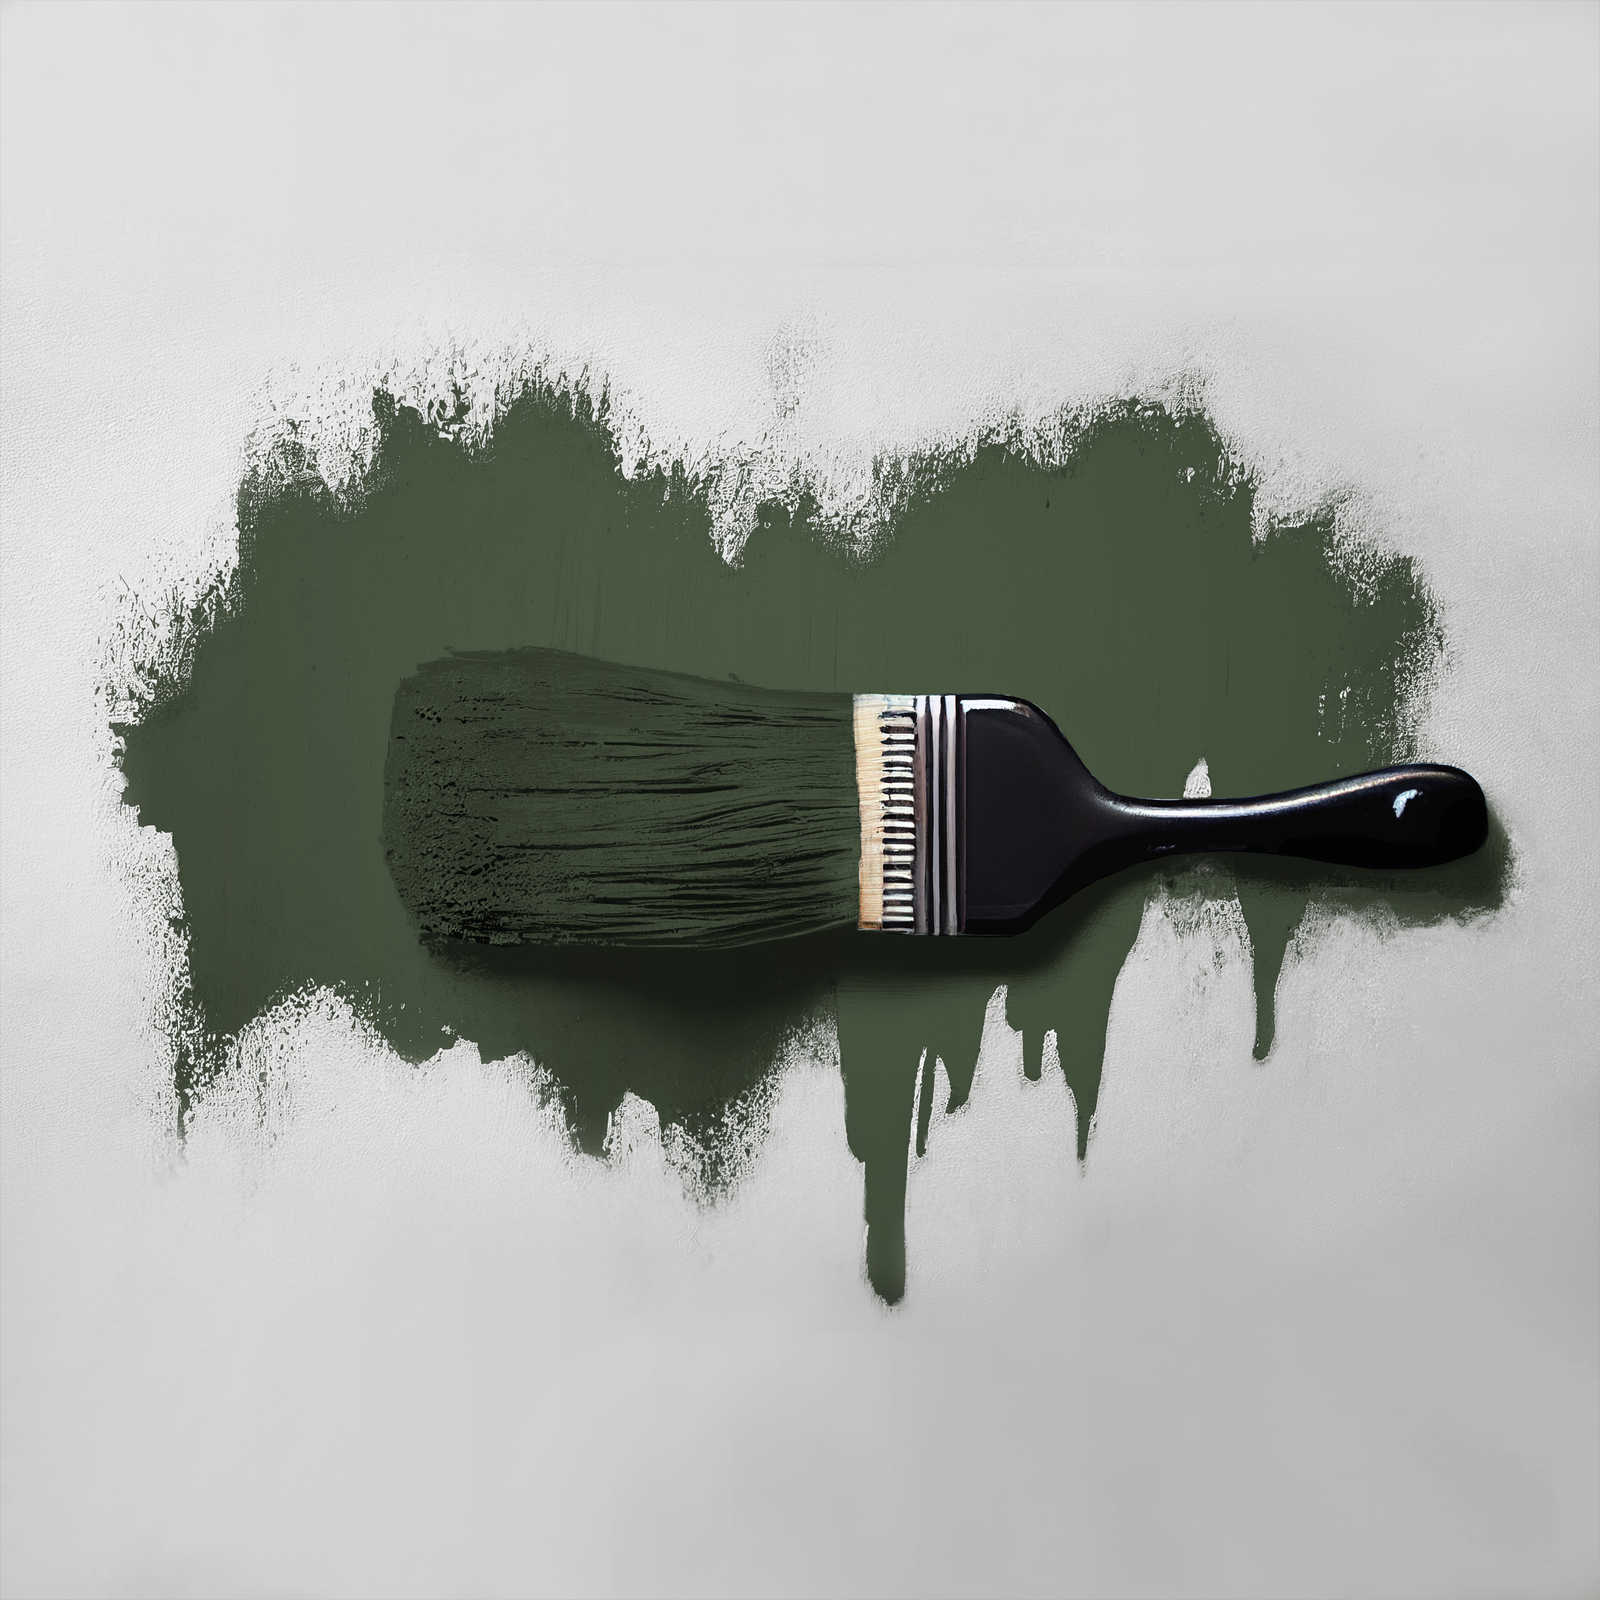             Wall Paint TCK4006 »Zippy Zuchini« in intensive dark green – 5.0 litre
        